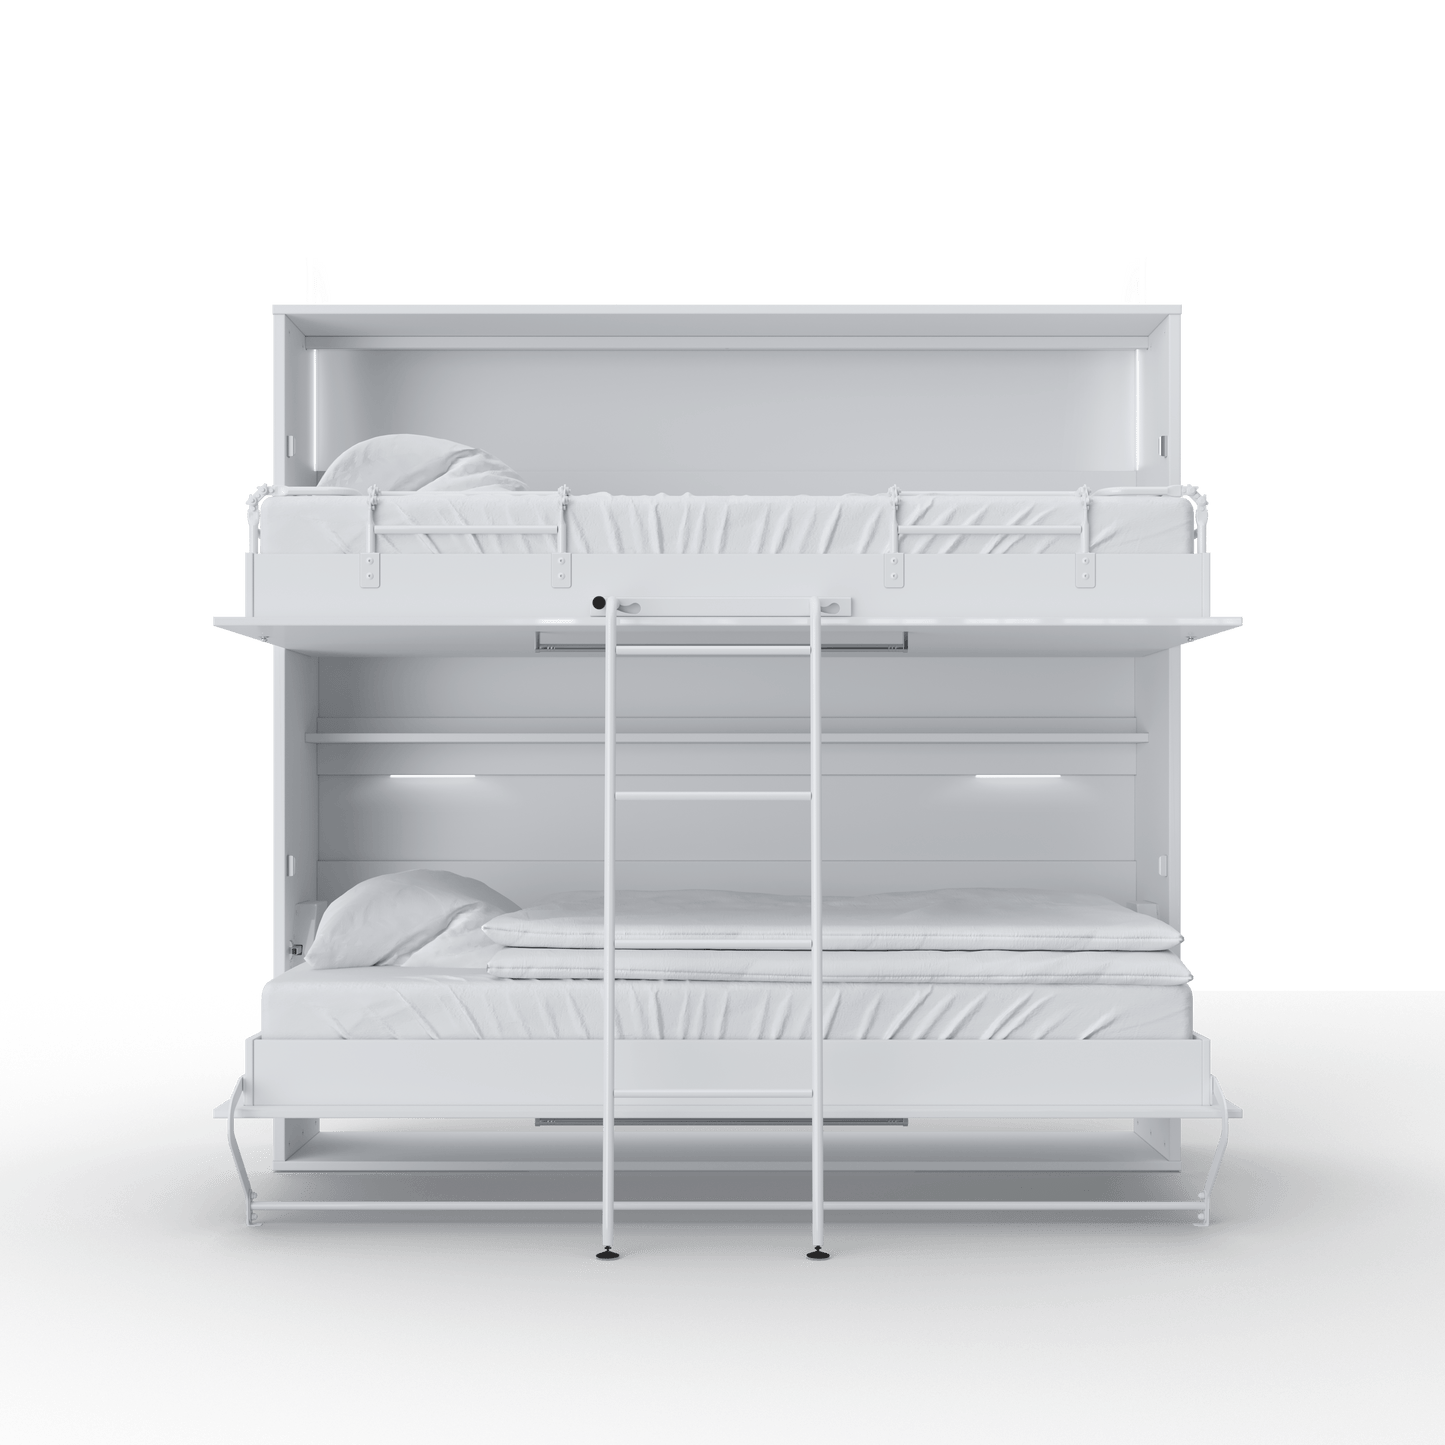 Maxima House Murphy Bunk Bed OTIS European TWIN size with mattresses